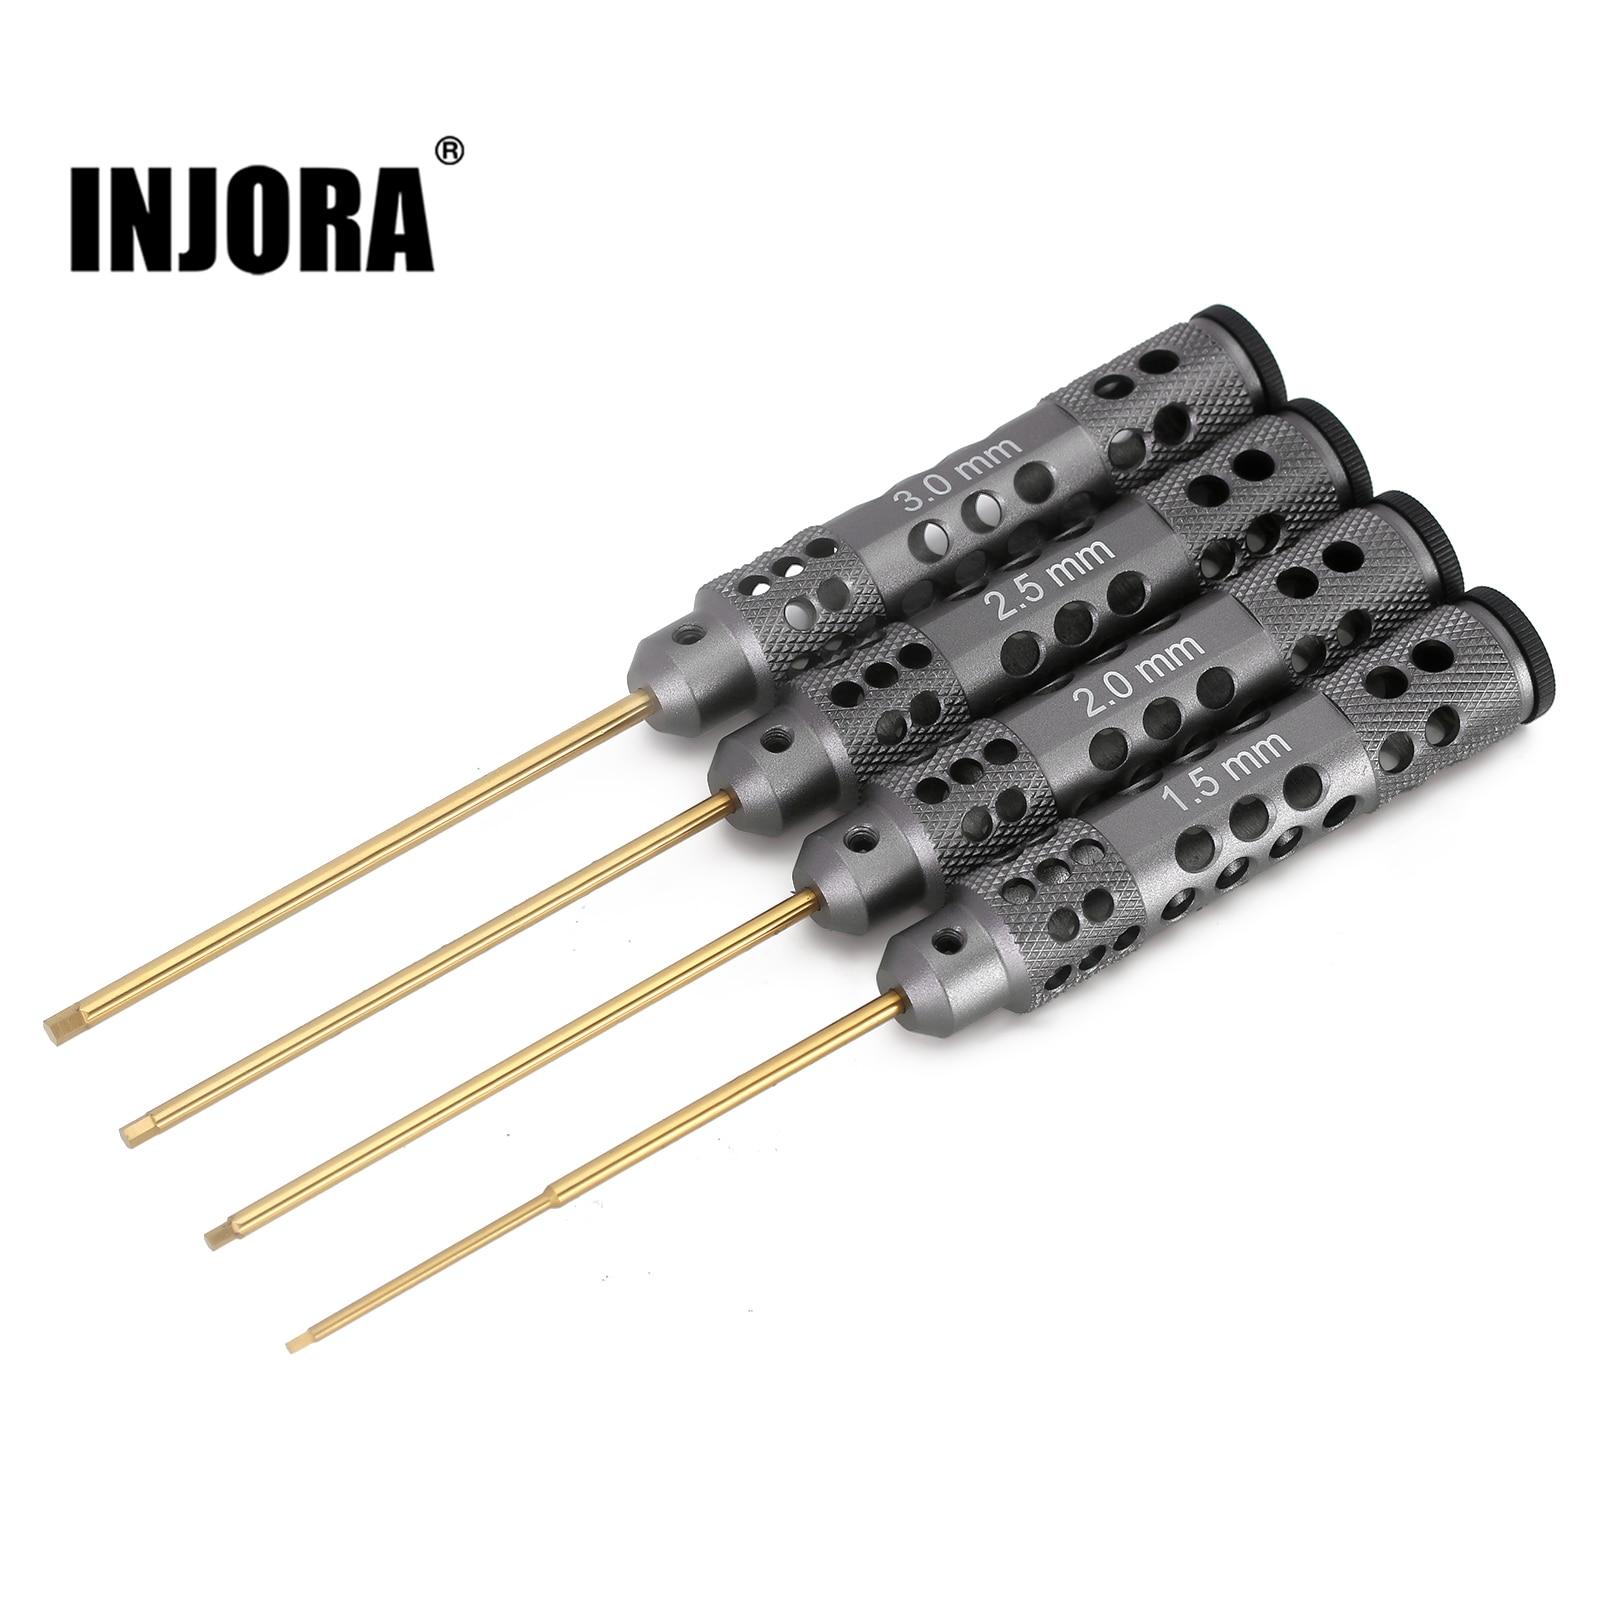 INJORA-4PCS-HSS-1-5mm-2mm-2-5mm-3mm-Hex-Screwdriver-Repair-Tool-Kit-for-RC.jpg